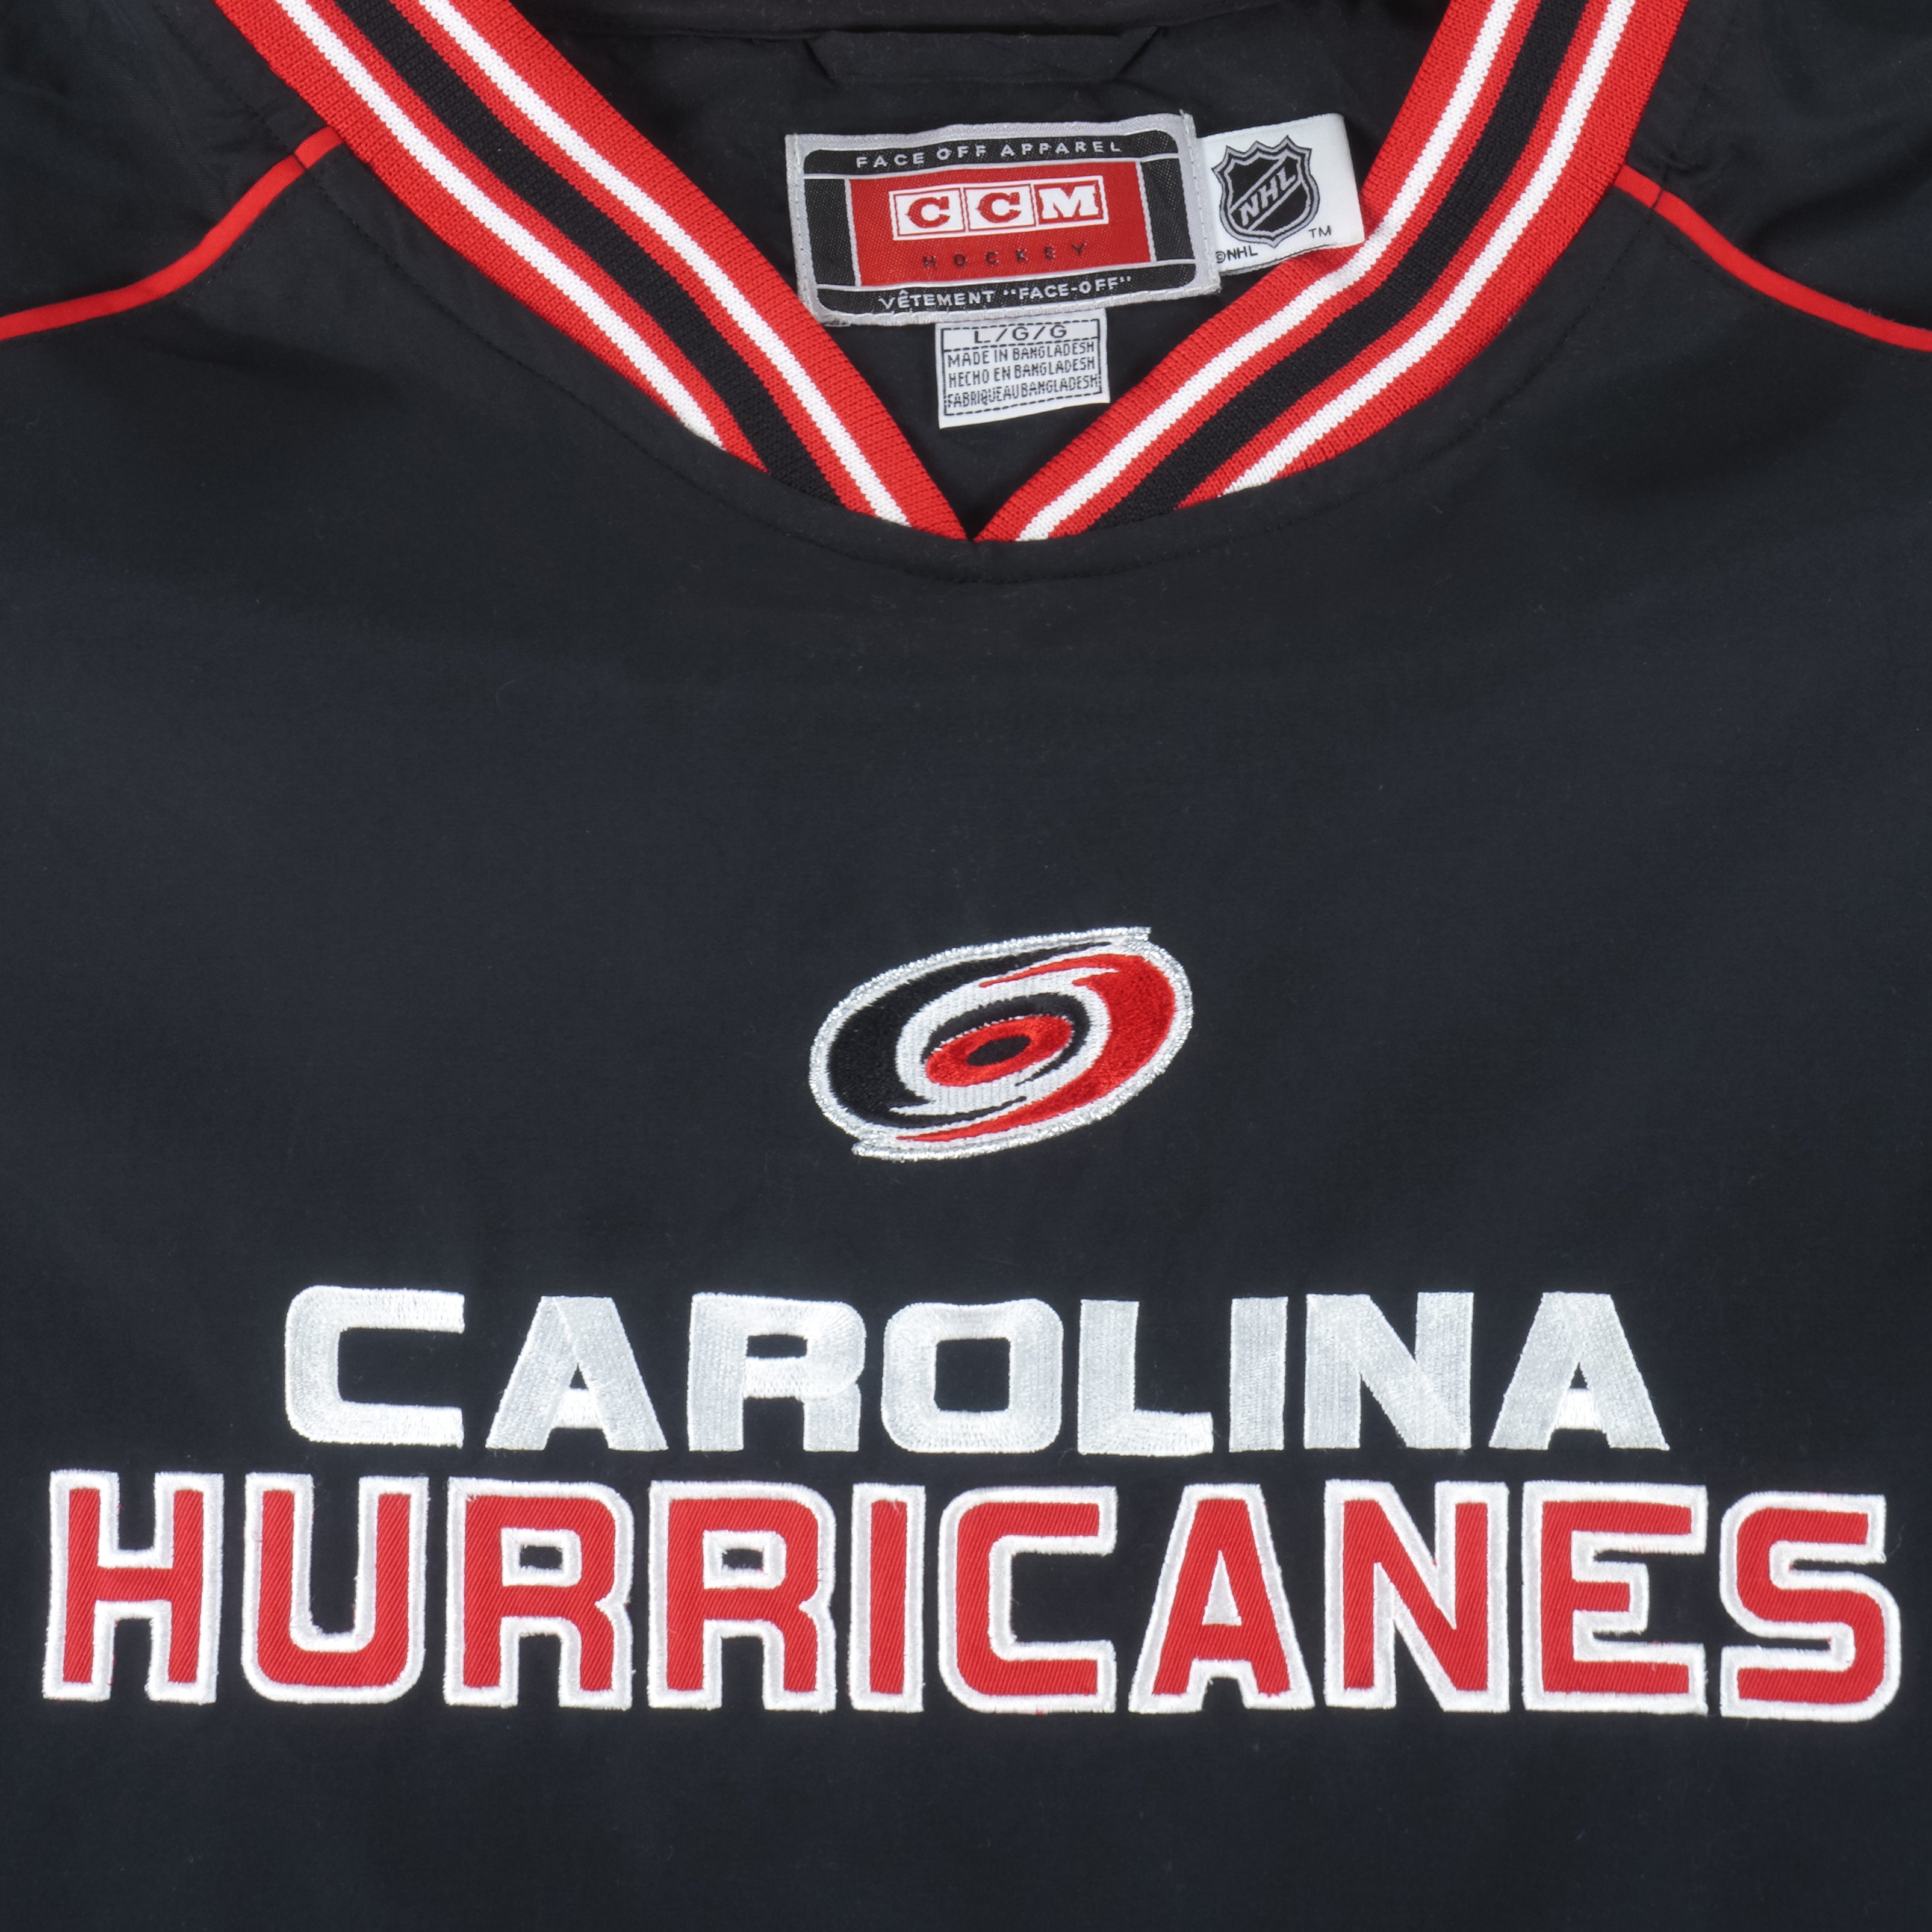 Carolina Hurricanes Merchandise, Jerseys, Apparel, Clothing